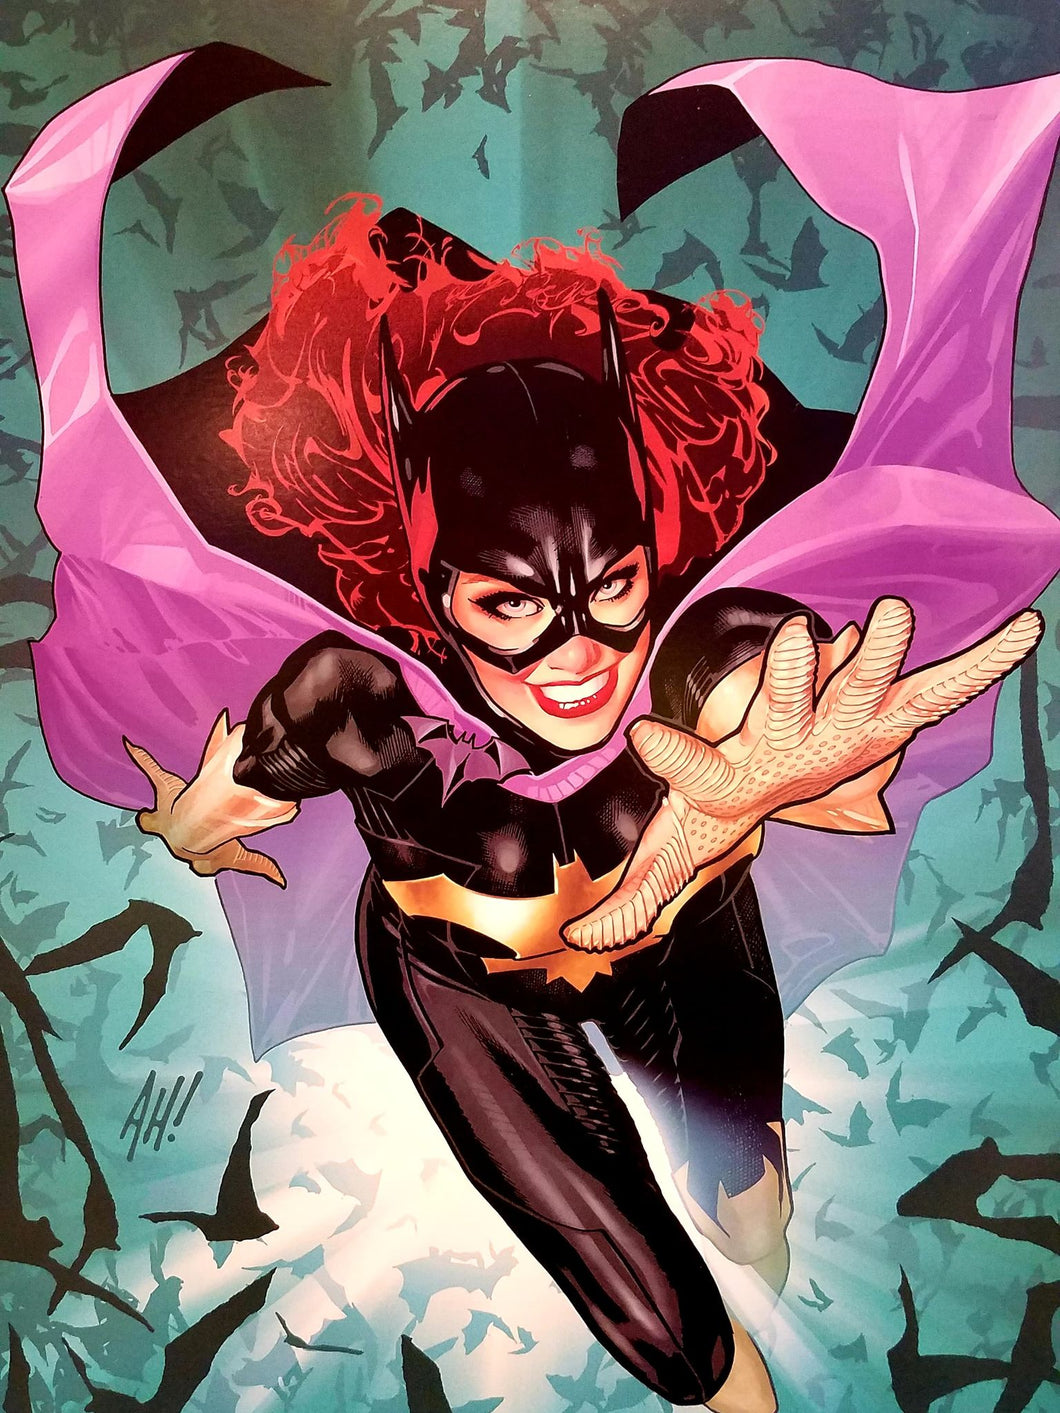 Batgirl 12x16 FRAMED Art Print by Adam Hughes, New DC Comics